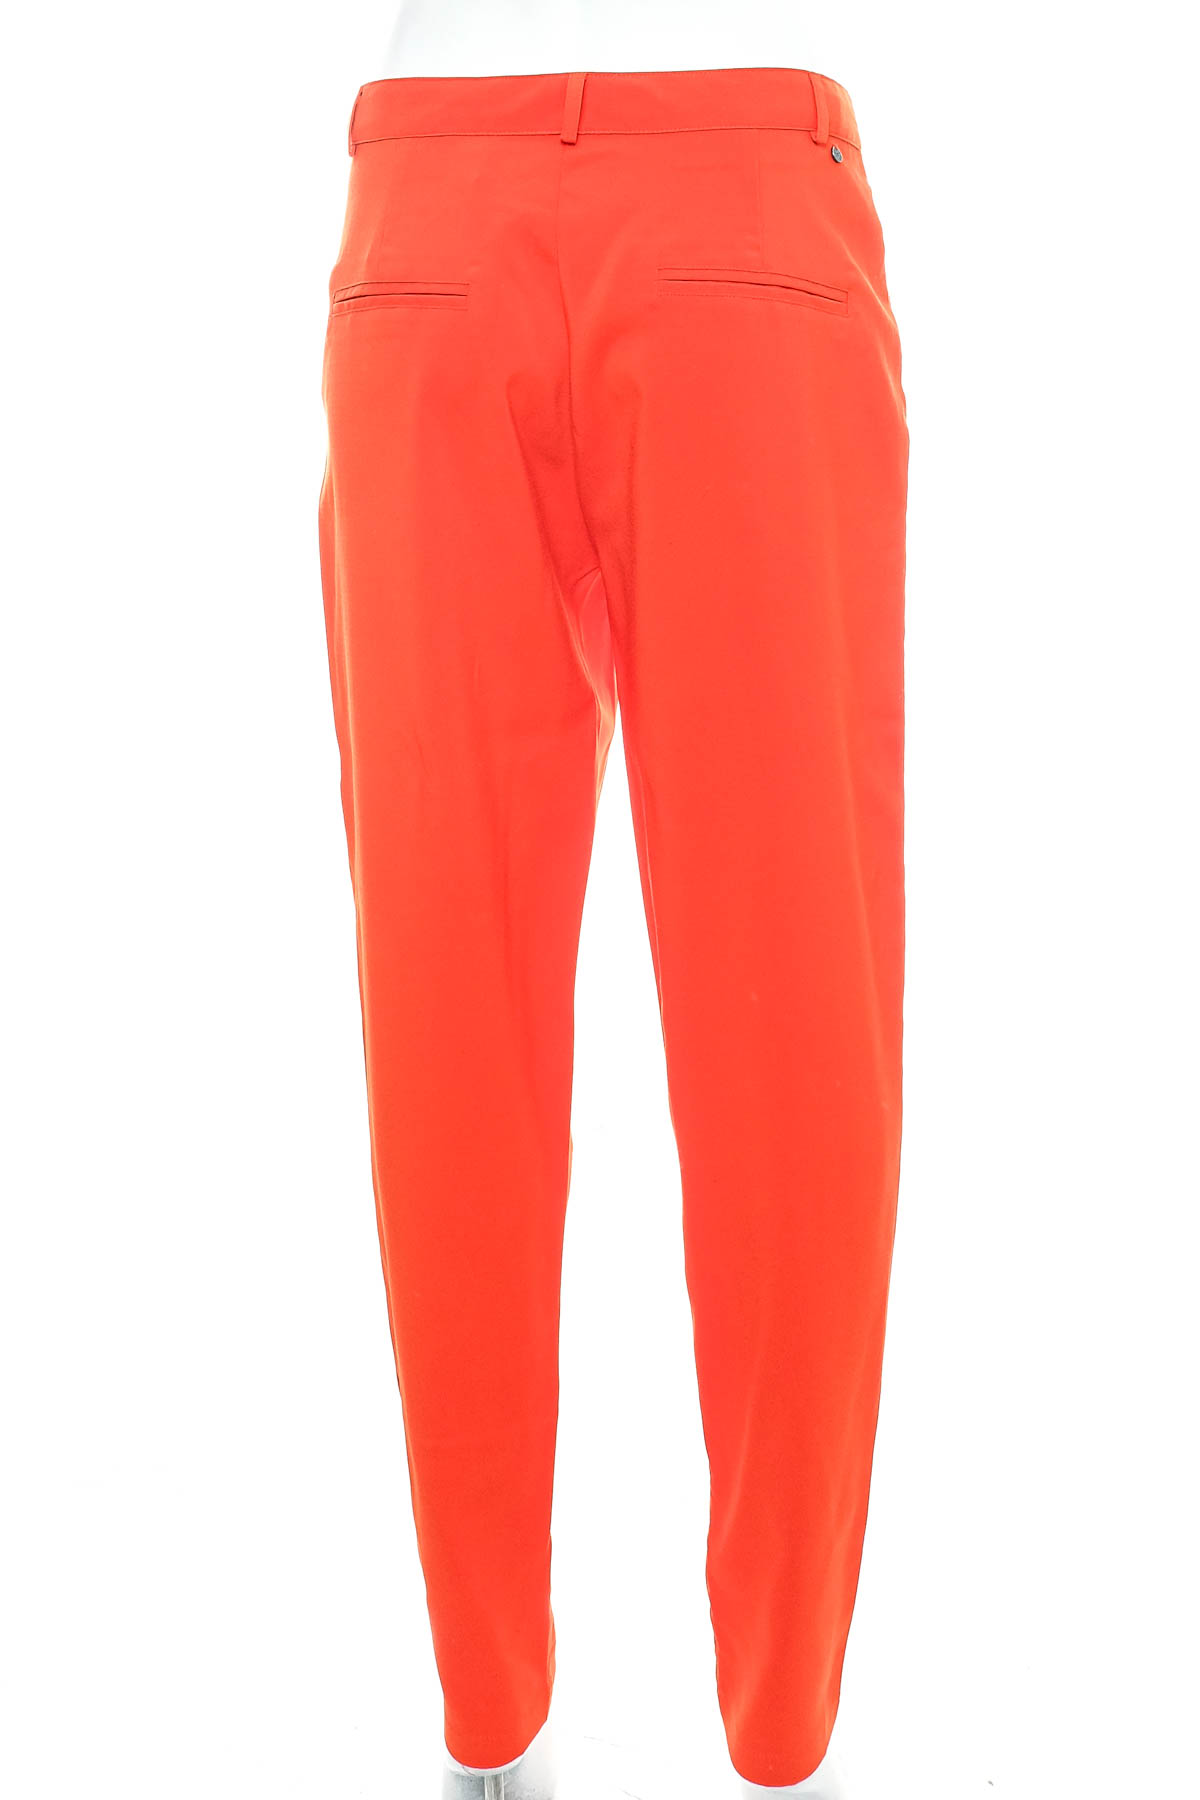 Pantaloni de damă - Trend BY CAPTAIN TORTUE - 1